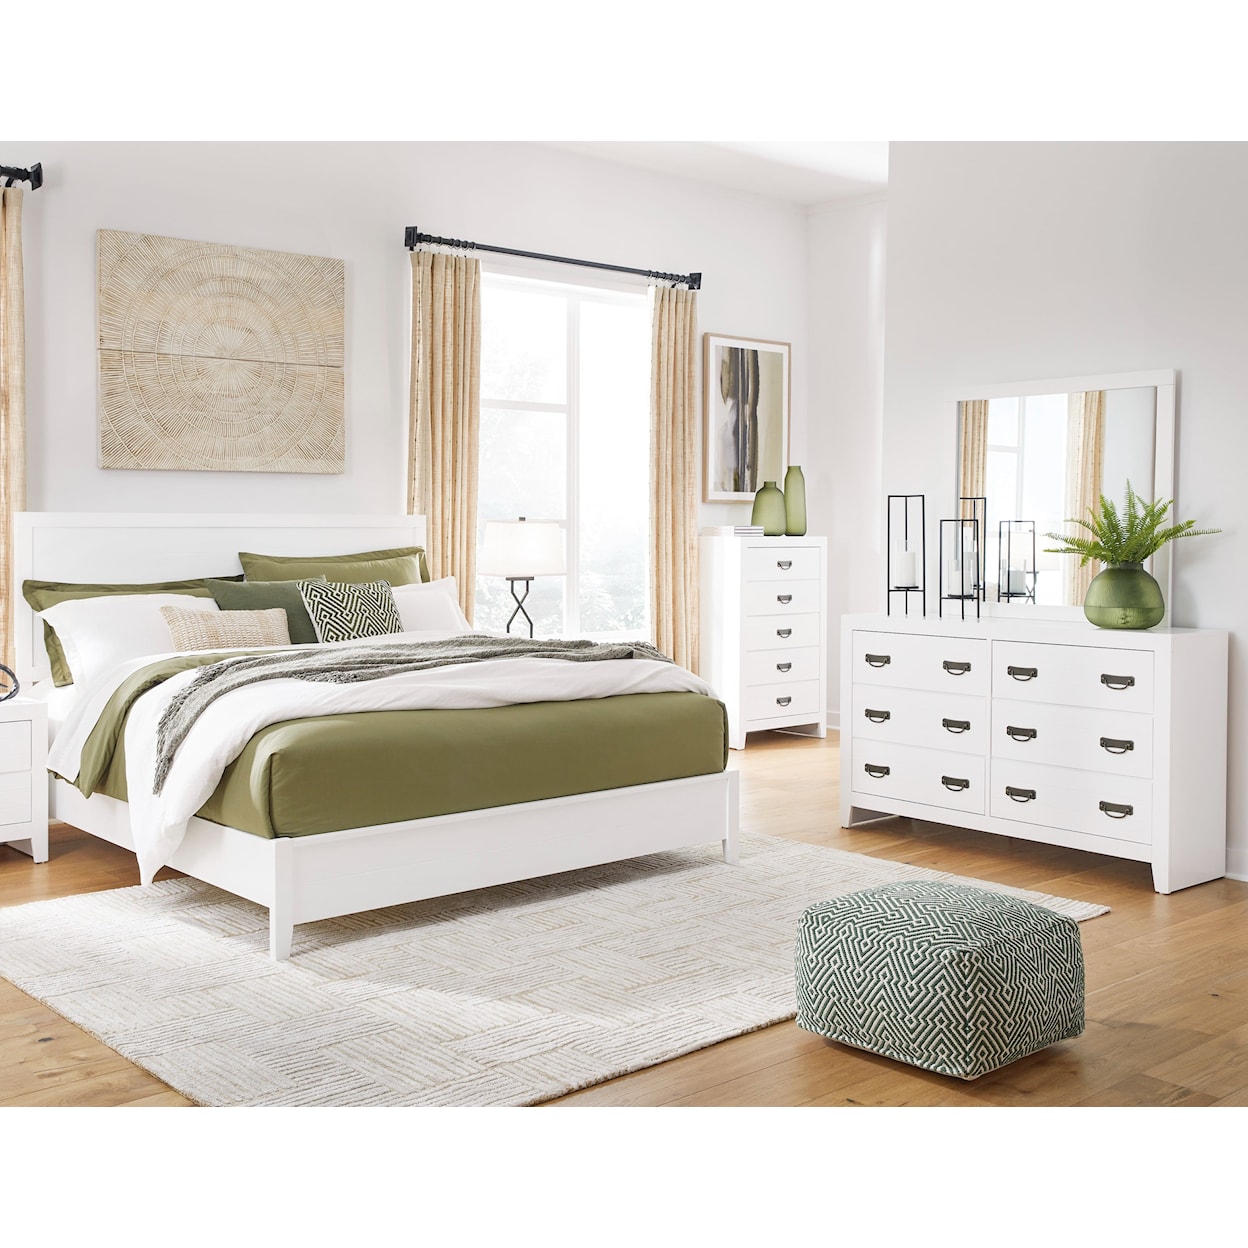 Ashley Furniture Signature Design Binterglen King Bedroom Set